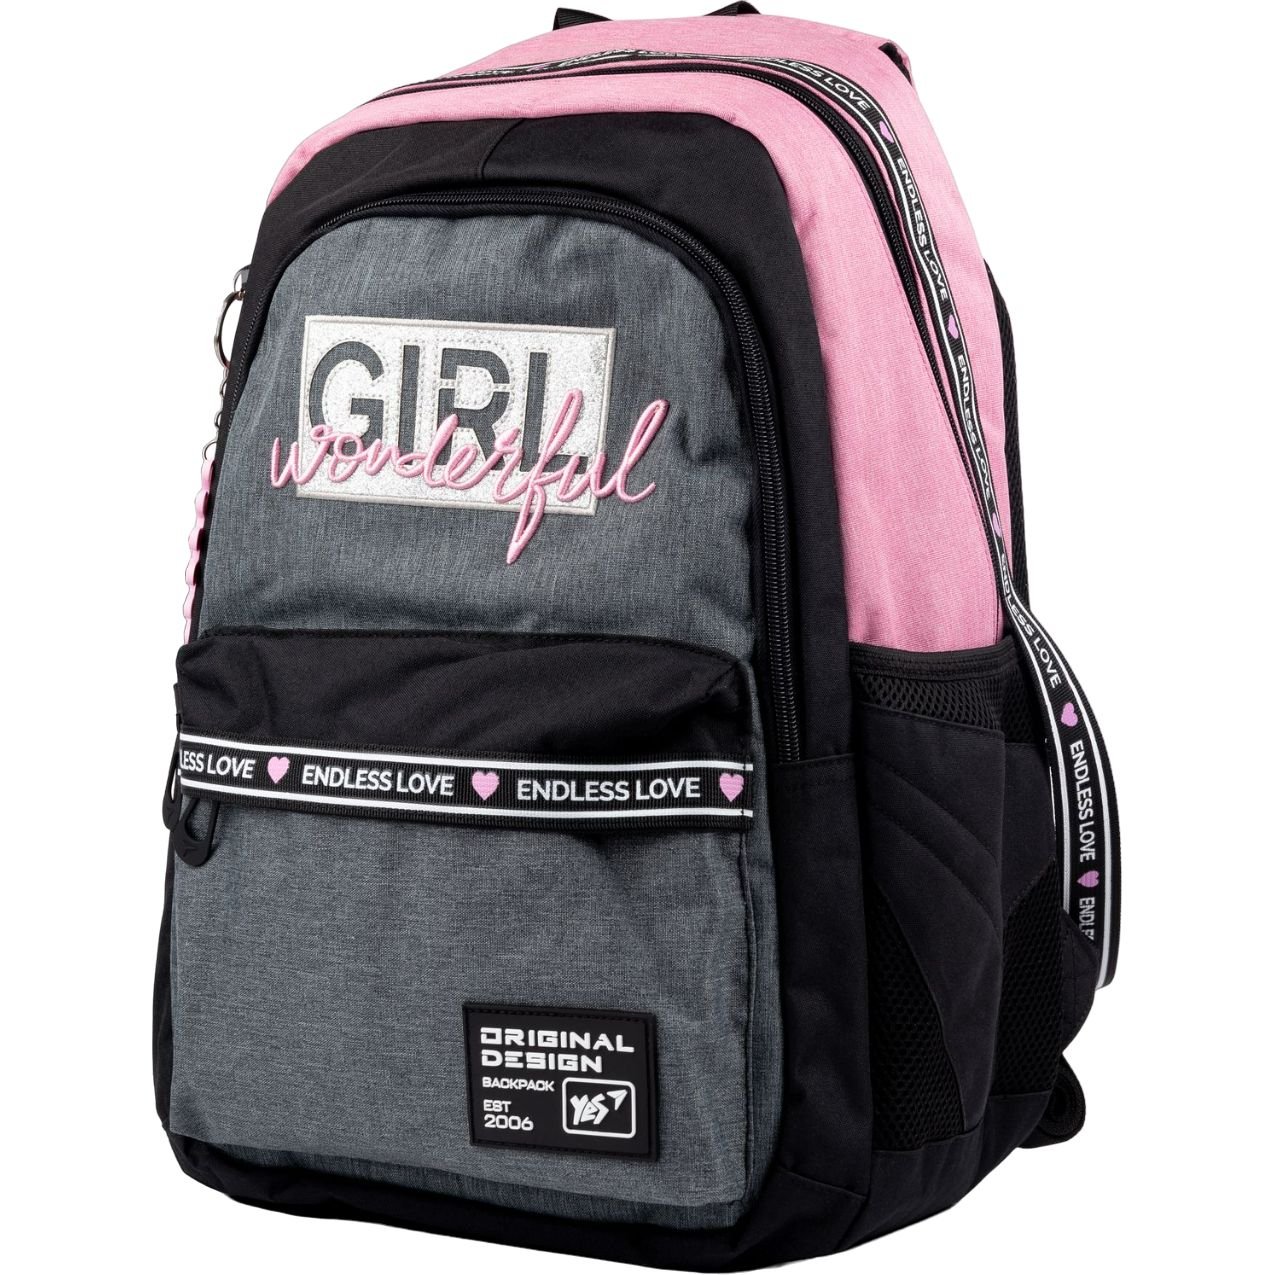 Рюкзак Yes TS-61 Girl Wonderful, черный с розовым (558908) - фото 1